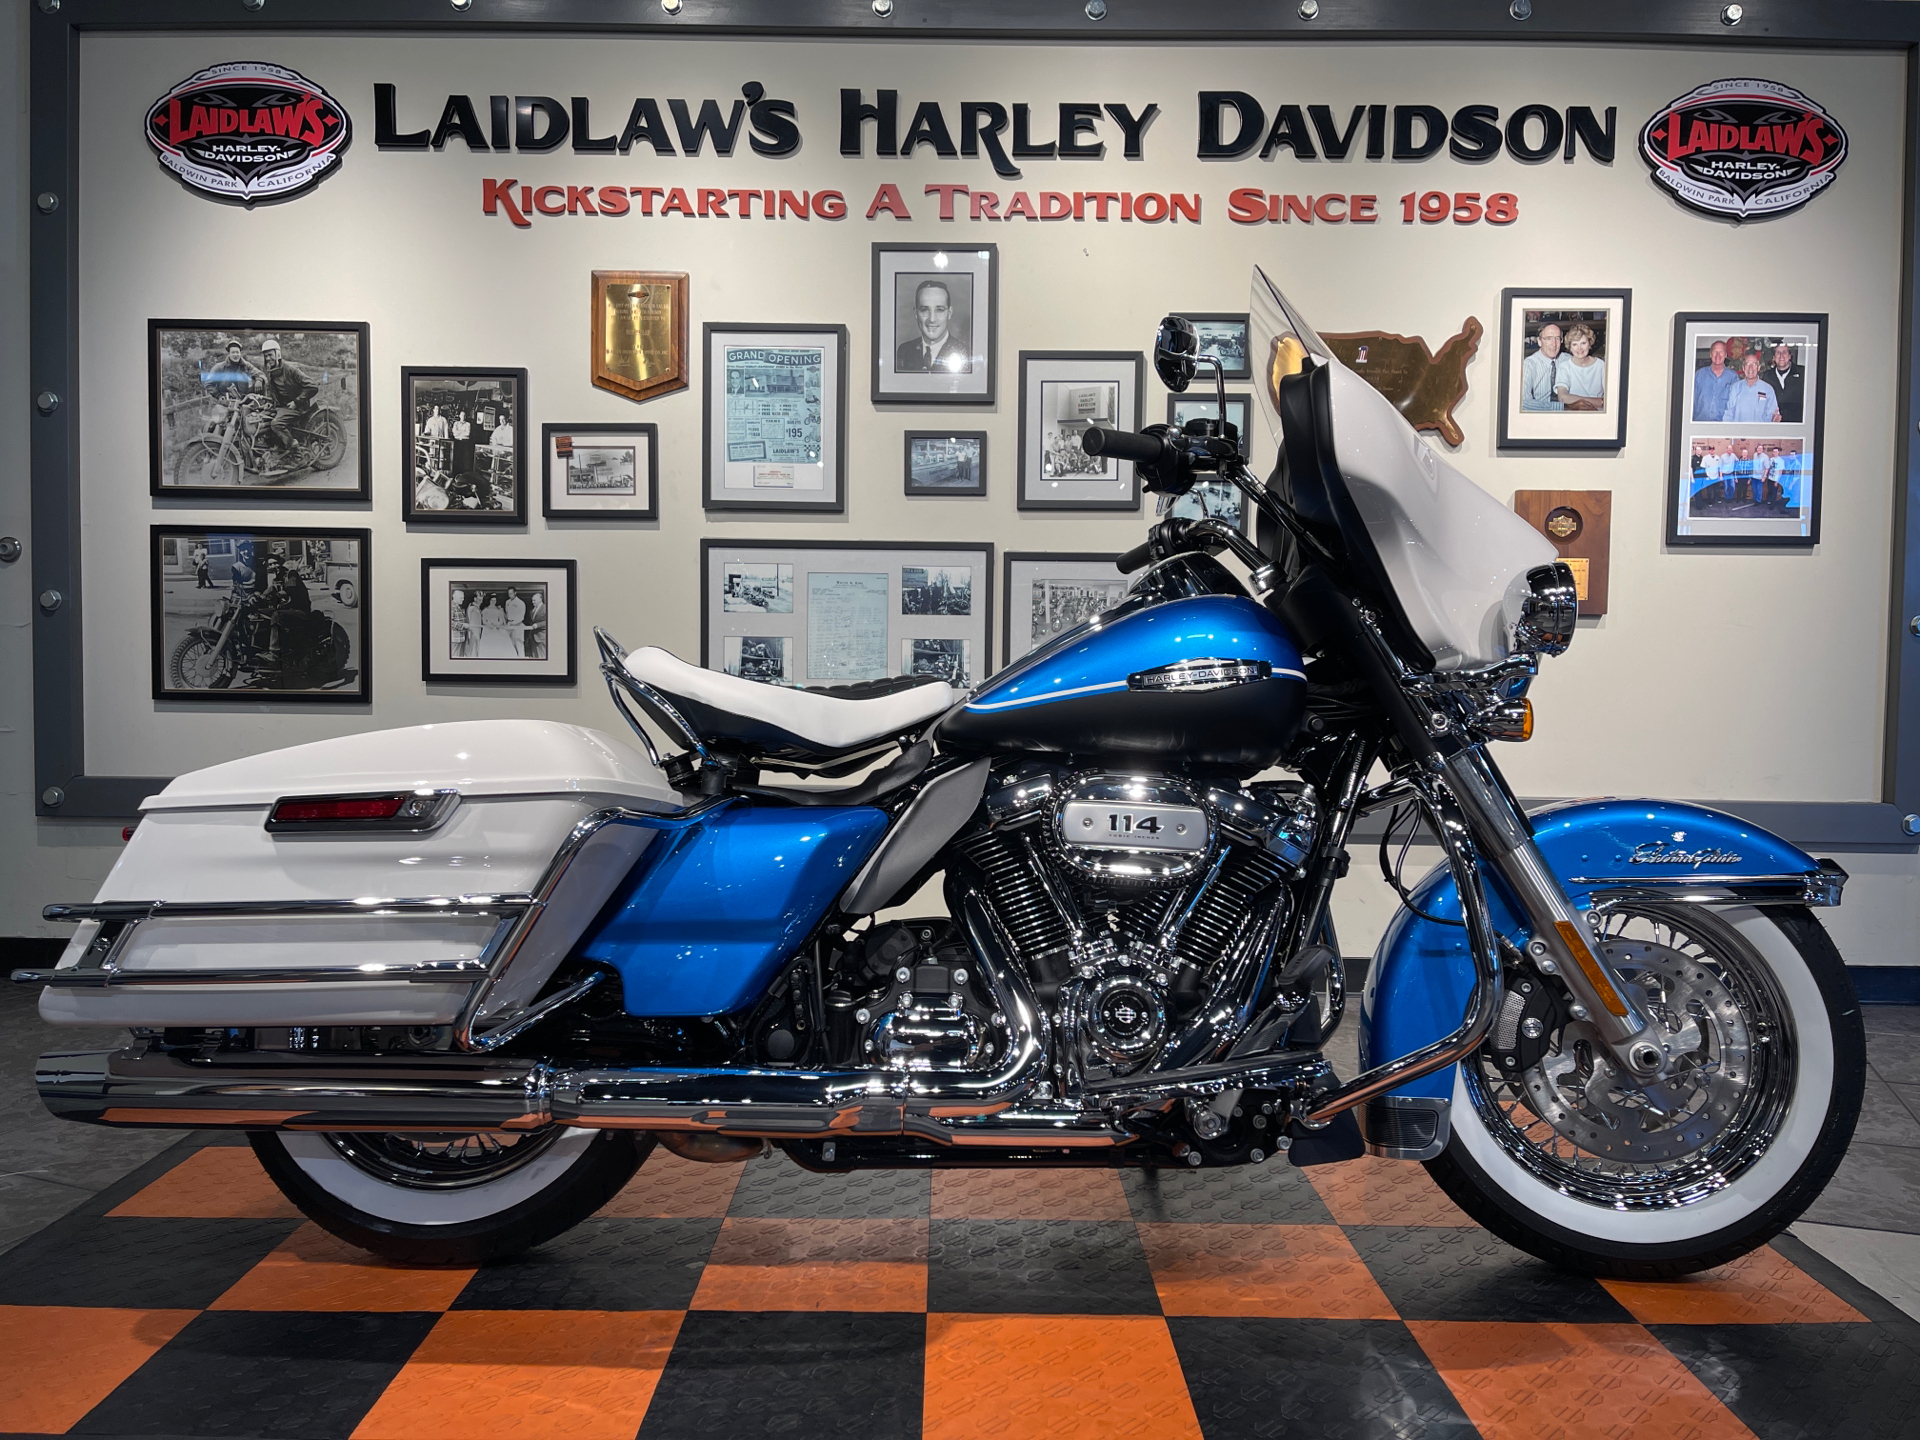 New 2021 Harley Davidson Electra Glide Revival Hi Fi Blue Birch White Baldwin Park Ca 29307